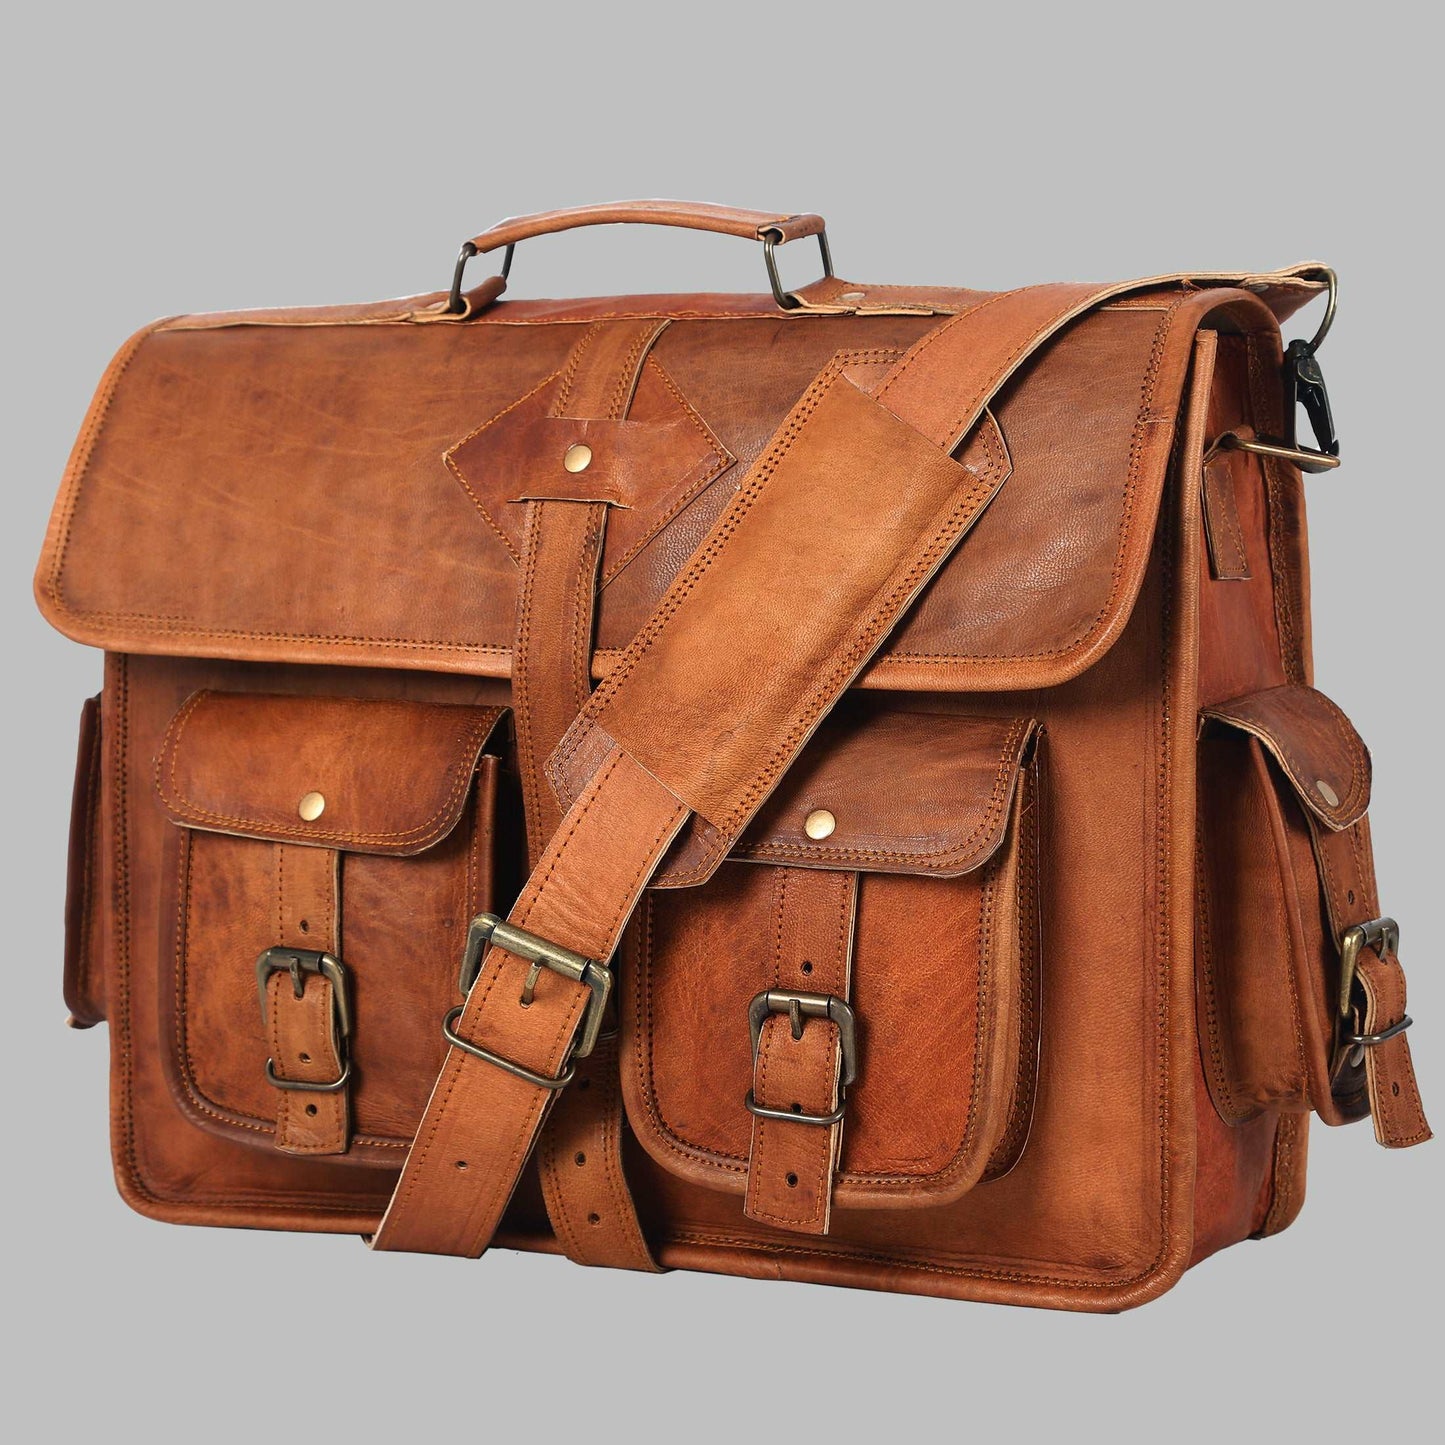 Leather Messenger Bag for Men and Women | Best Laptop Briefcase Satchel Computer Bag with Adjustable Strap